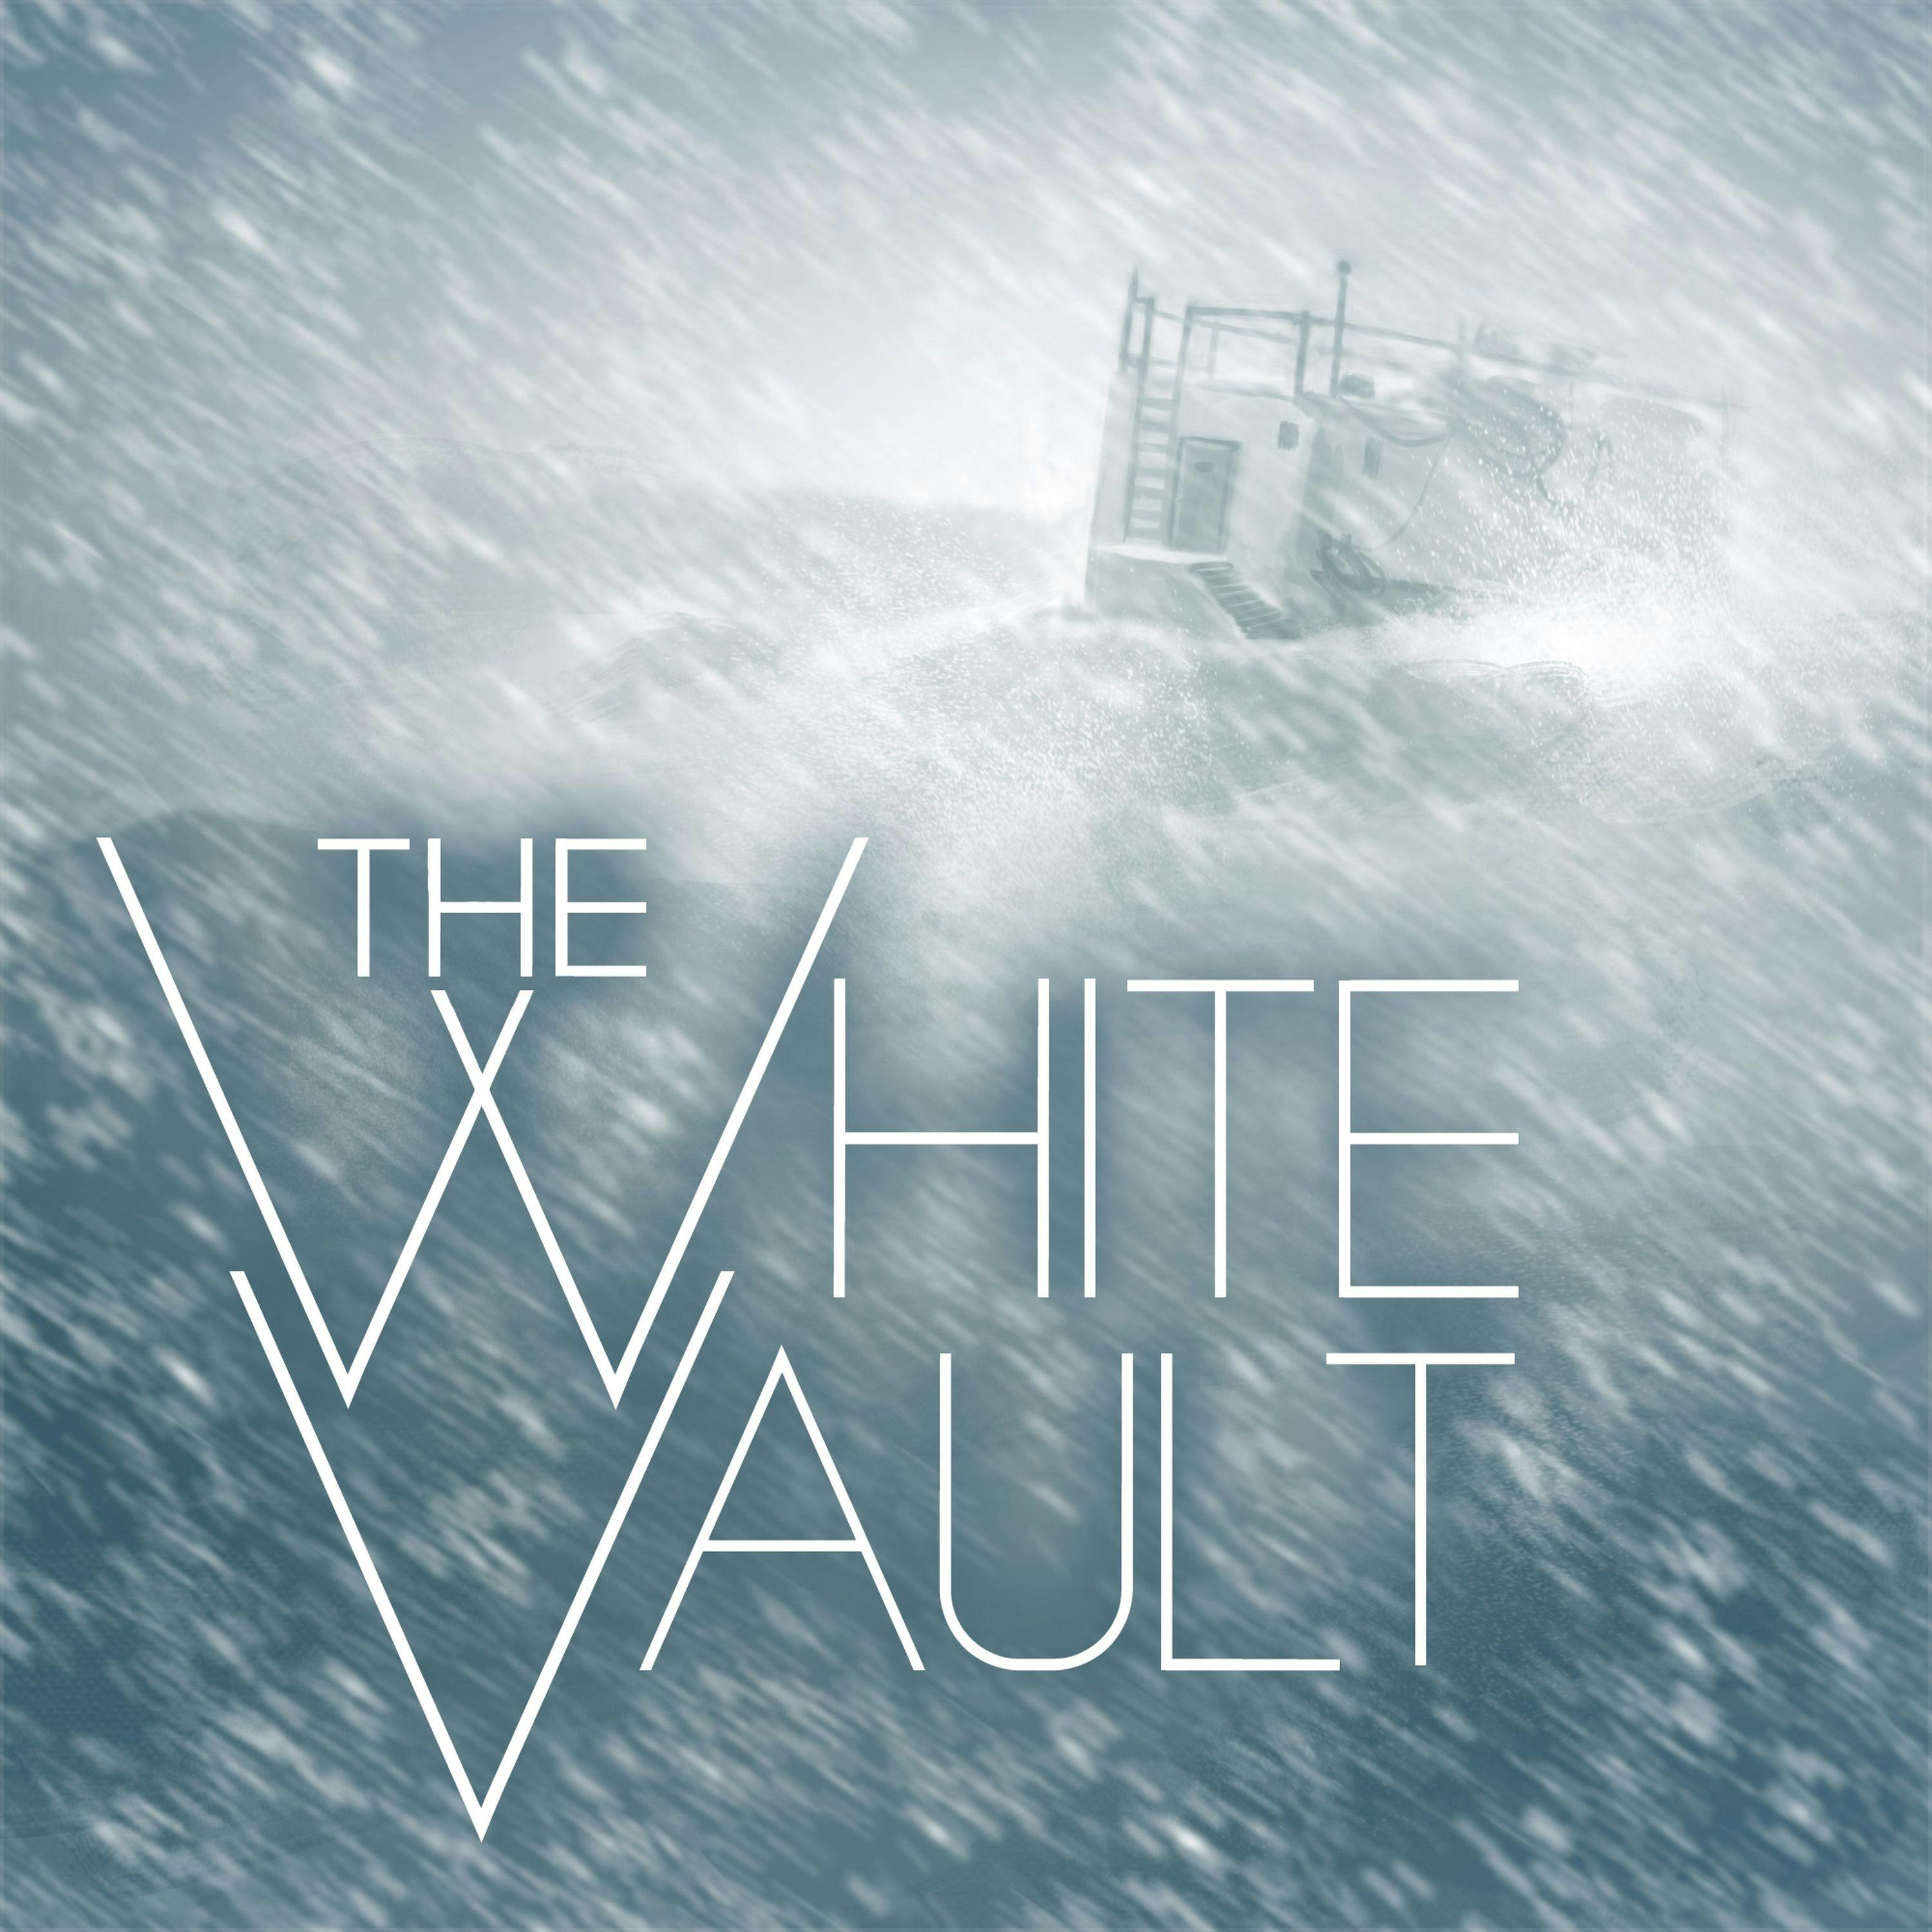 A Peek Behind The White Vault: Spoiler Free